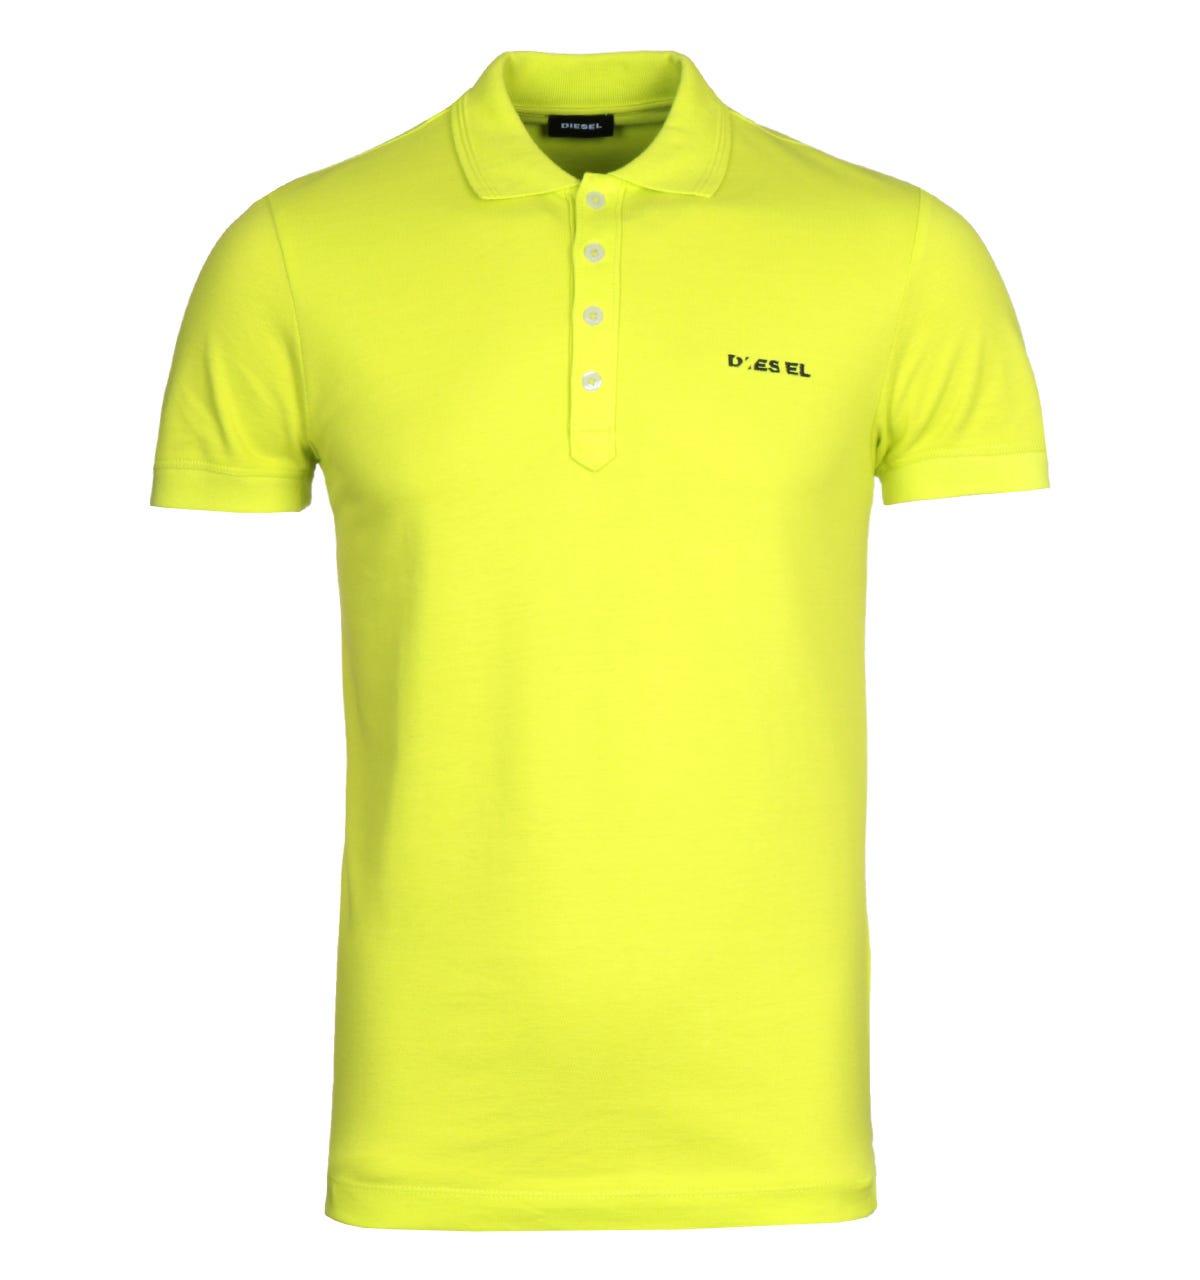 role break Northwest DIESEL Cotton T-heal Broken Logo Yellow Polo Shirt for Men - Lyst